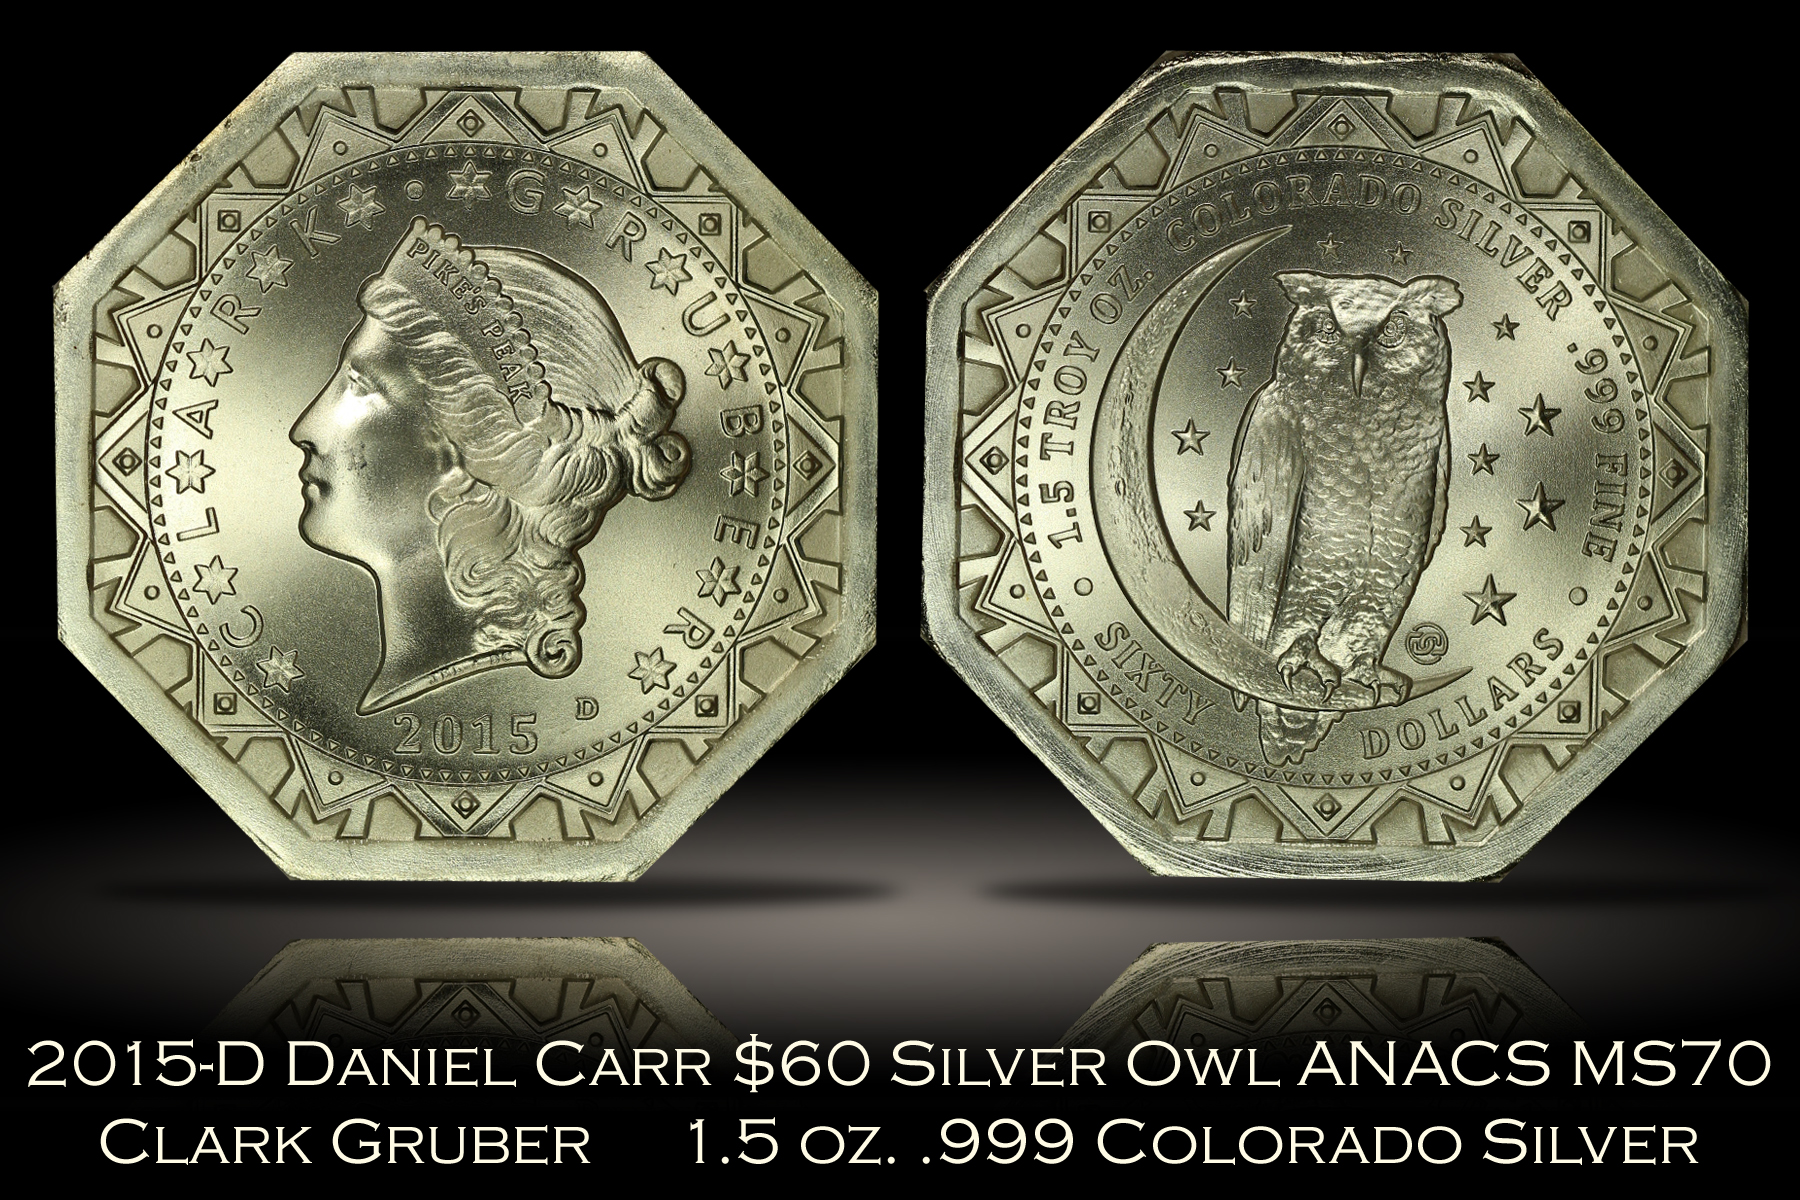 2015-D Daniel Carr $60 1.5 oz. Octagonal Silver Owl ANACS MS70